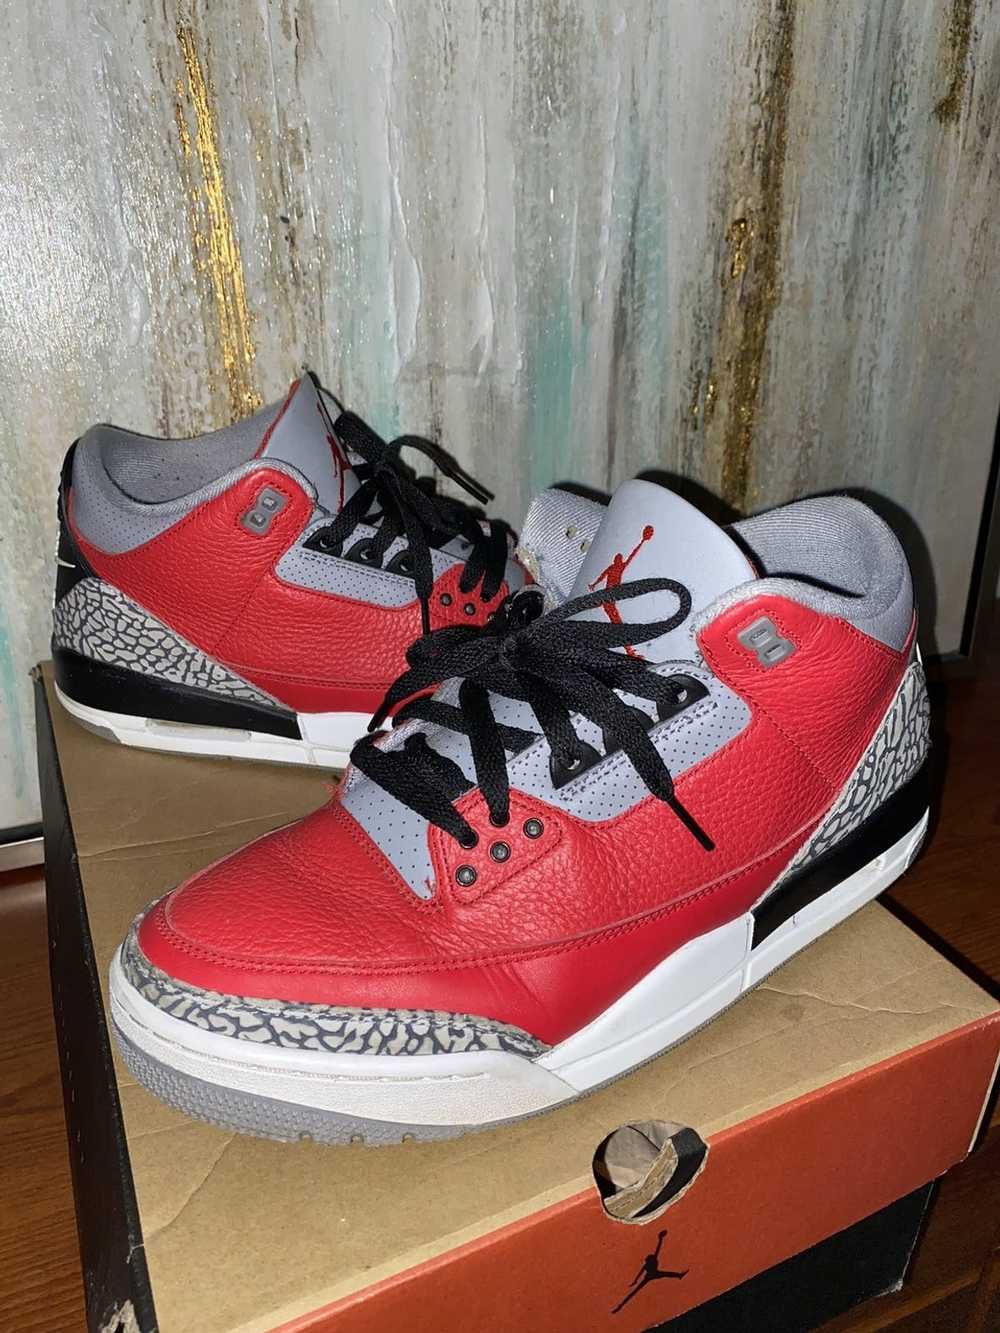 Jordan Brand × Nike Jordan 3 Retro Fire Red - image 1